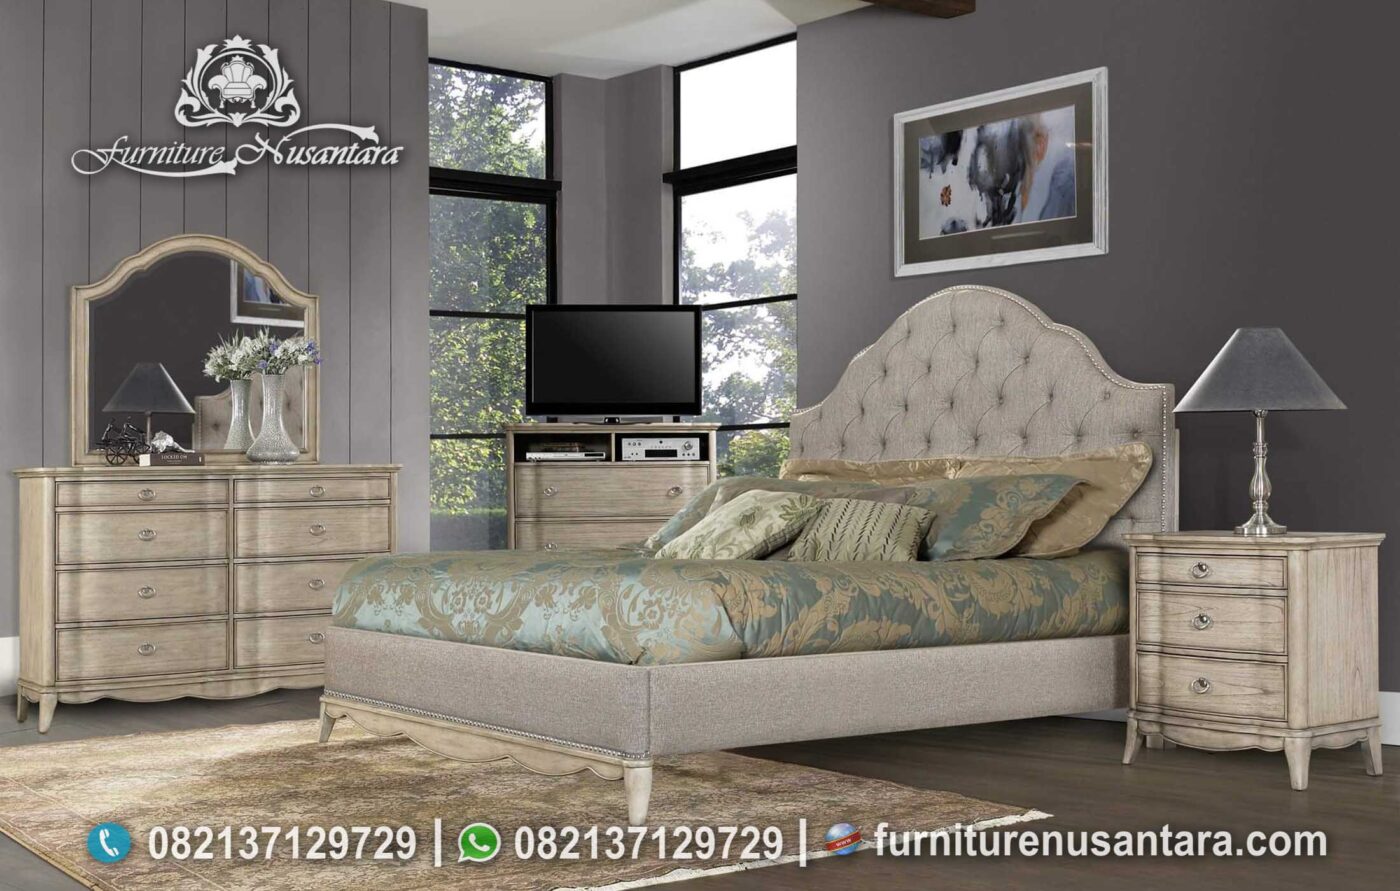 Kamar Tidur Minimalis Harga Murah KS-240, Furniture Nusantara